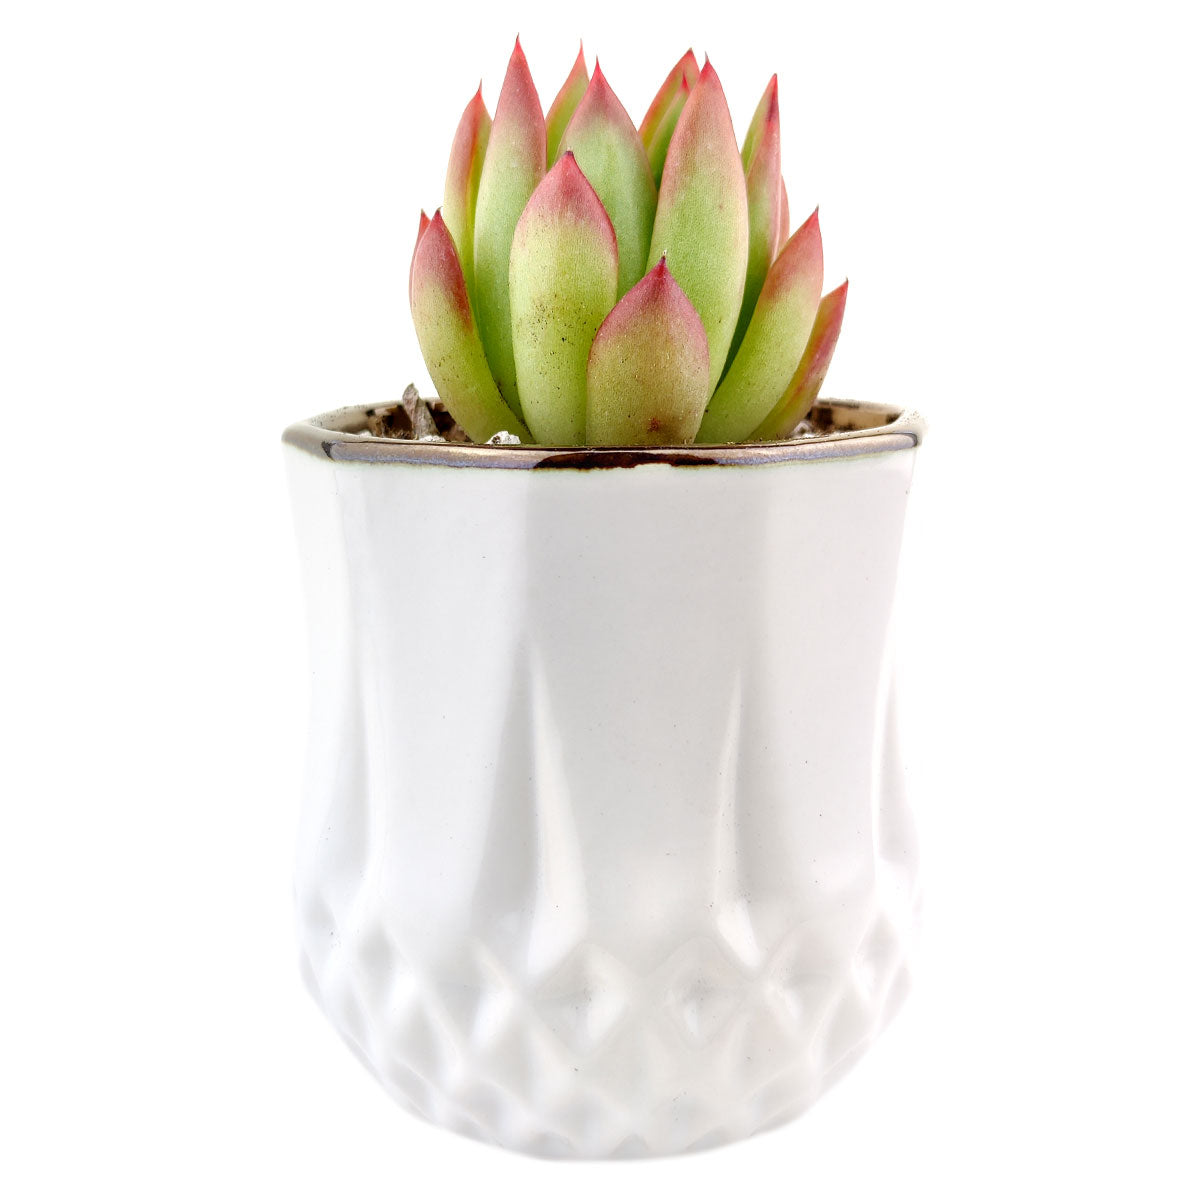 Golden Edge Pot for sale, ceramic vase for home decor, ceramic succulent and cactus pots for sale, Succulent gift ideas